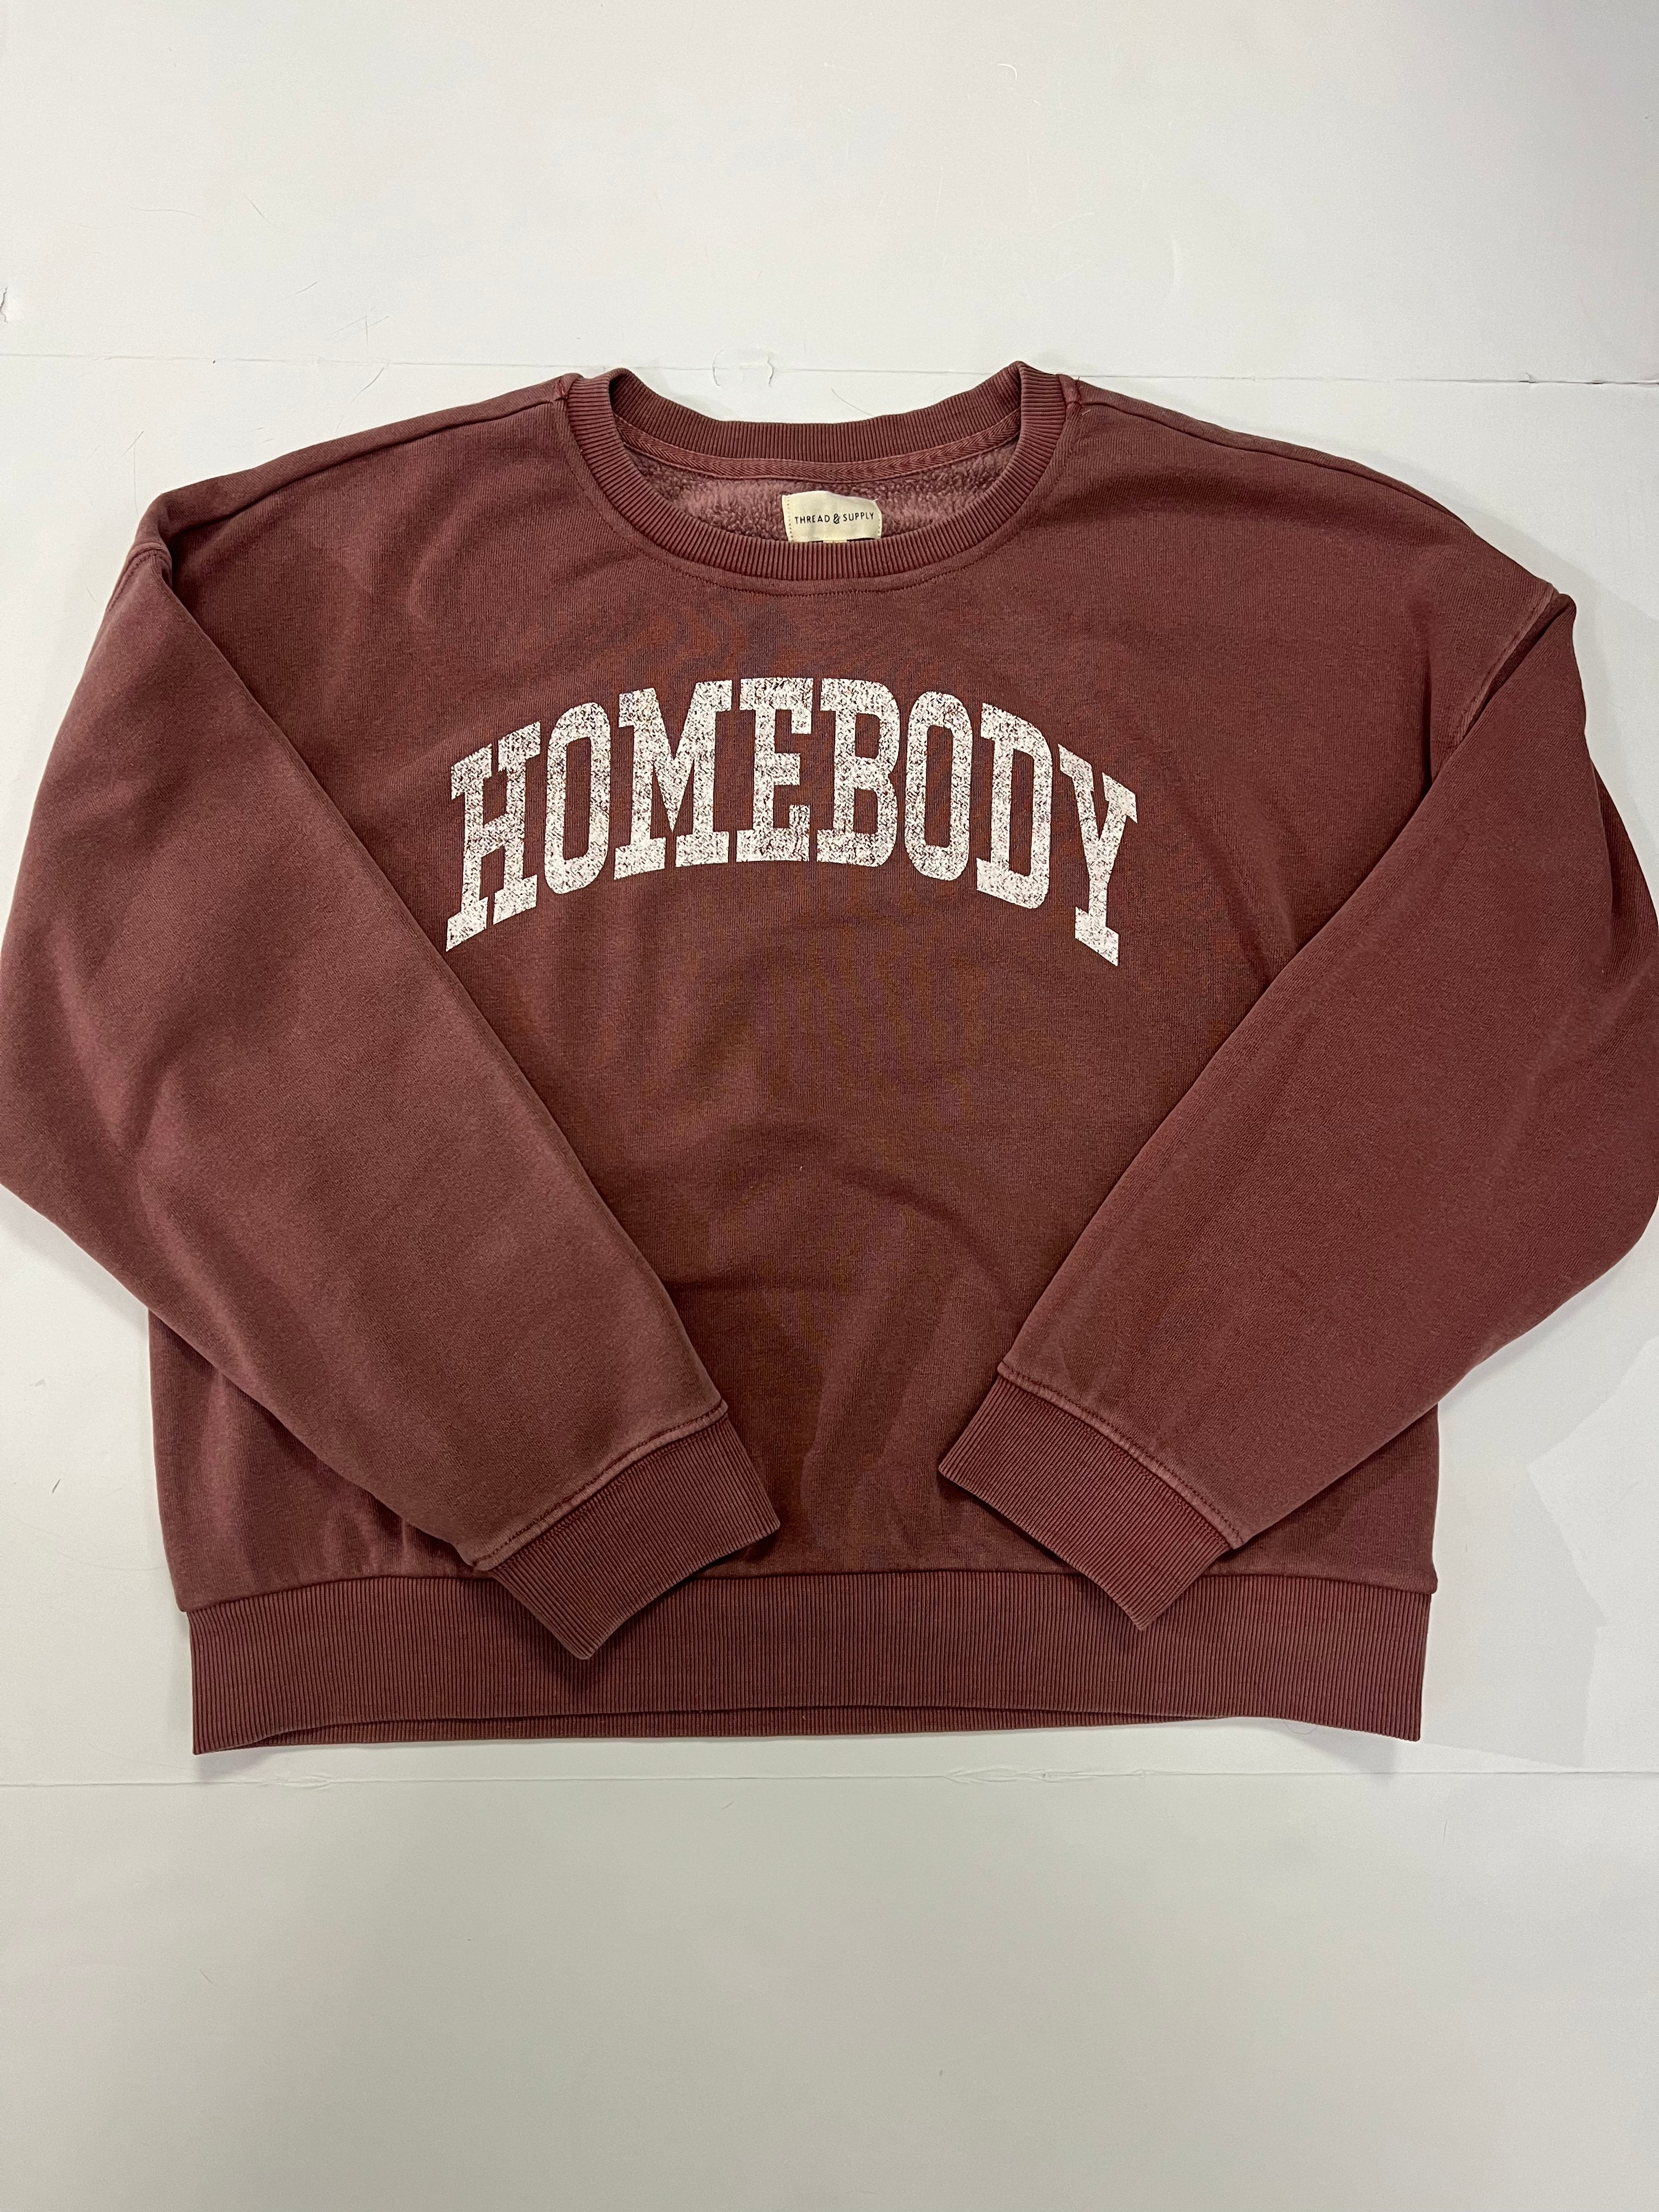 THREAD & SUPPLY Homebody Sweatshirt